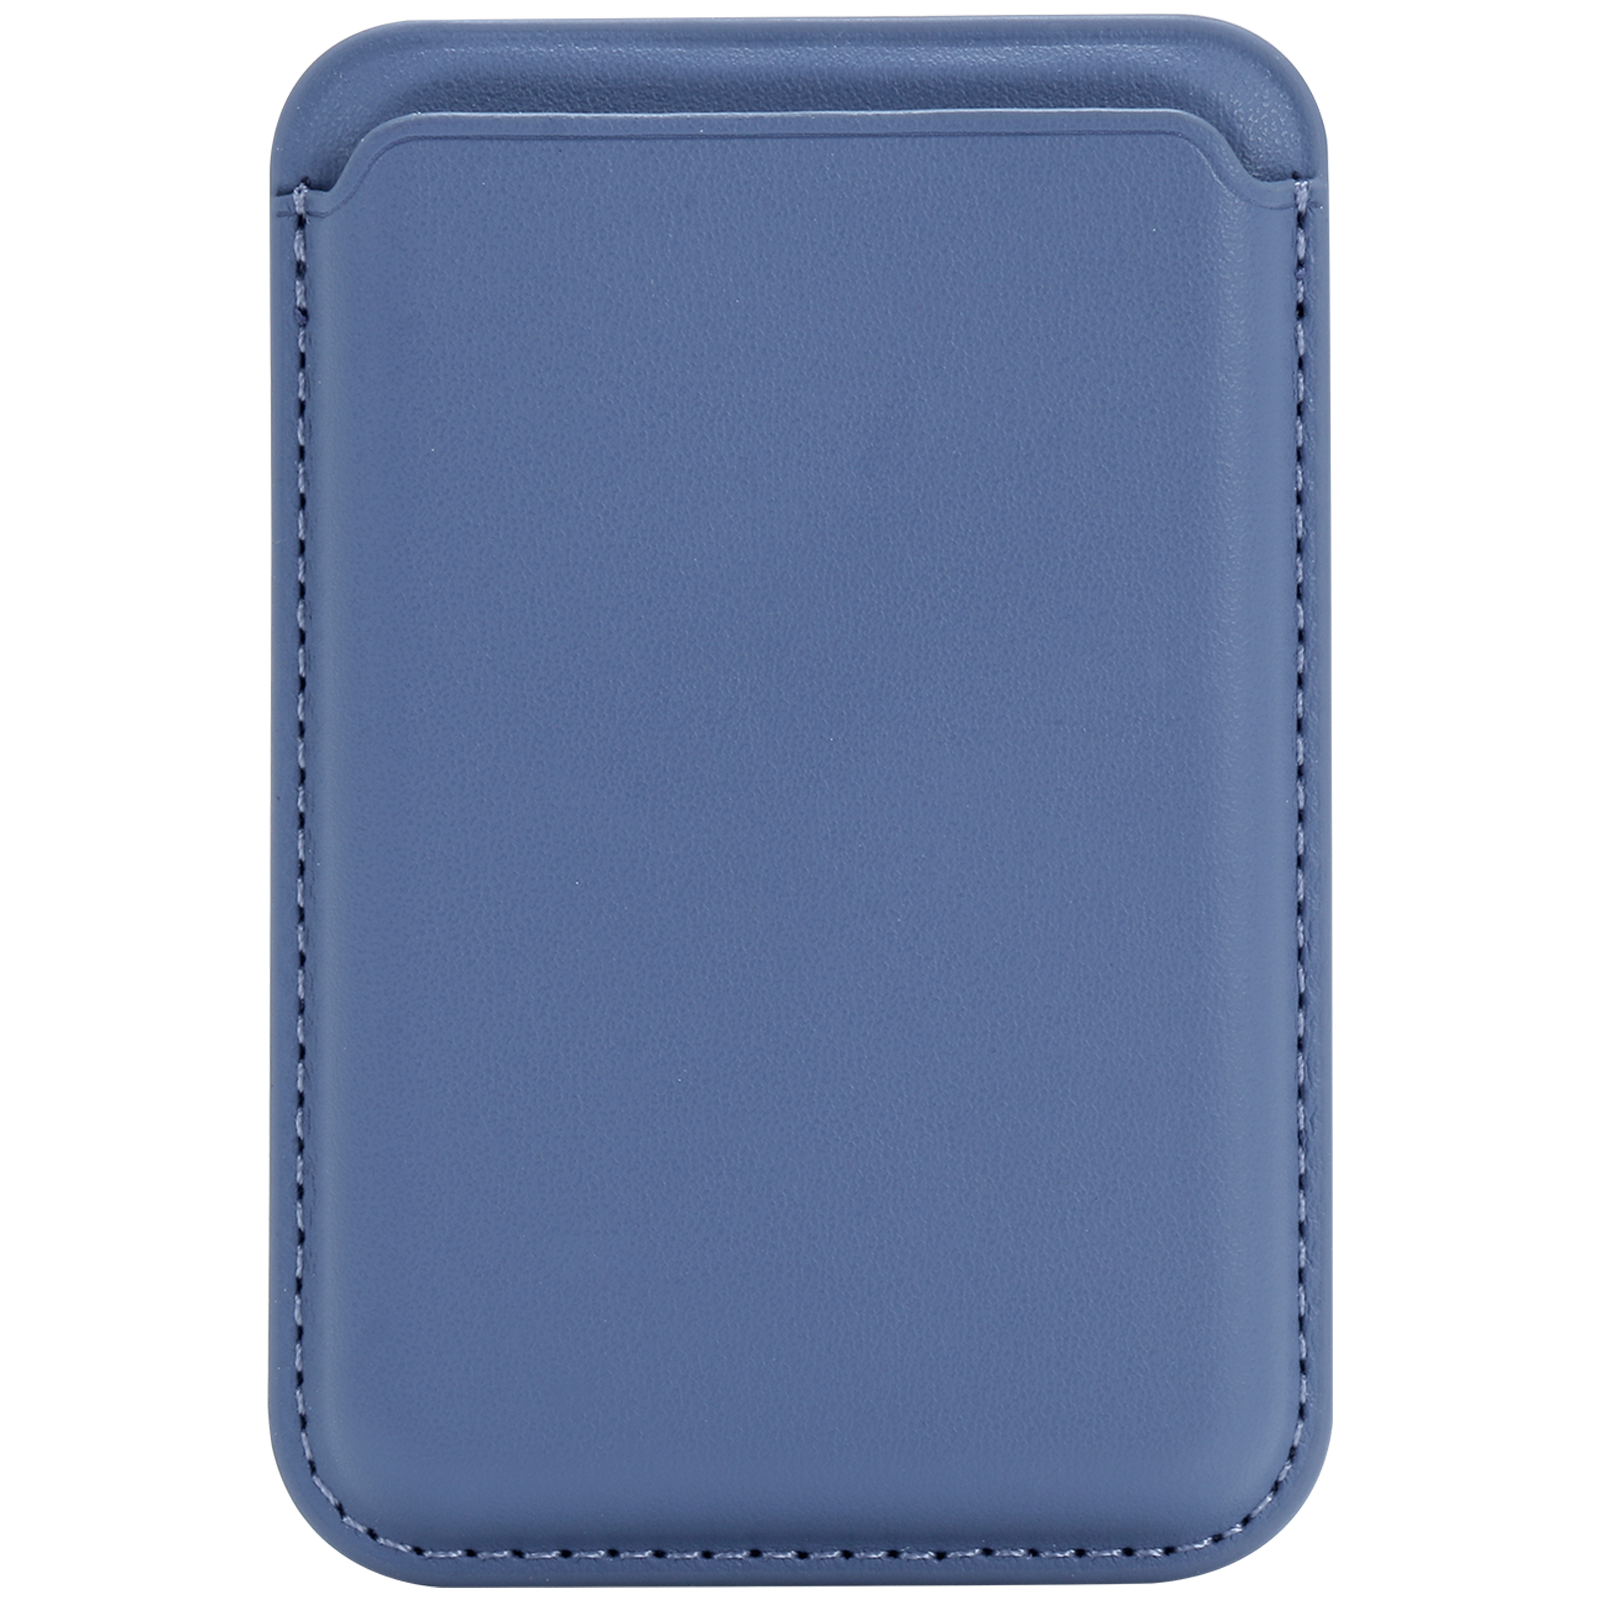 Croma Card Holder For iPhone (Apple Compatible, CRSPRBLTDA040629, Blue)